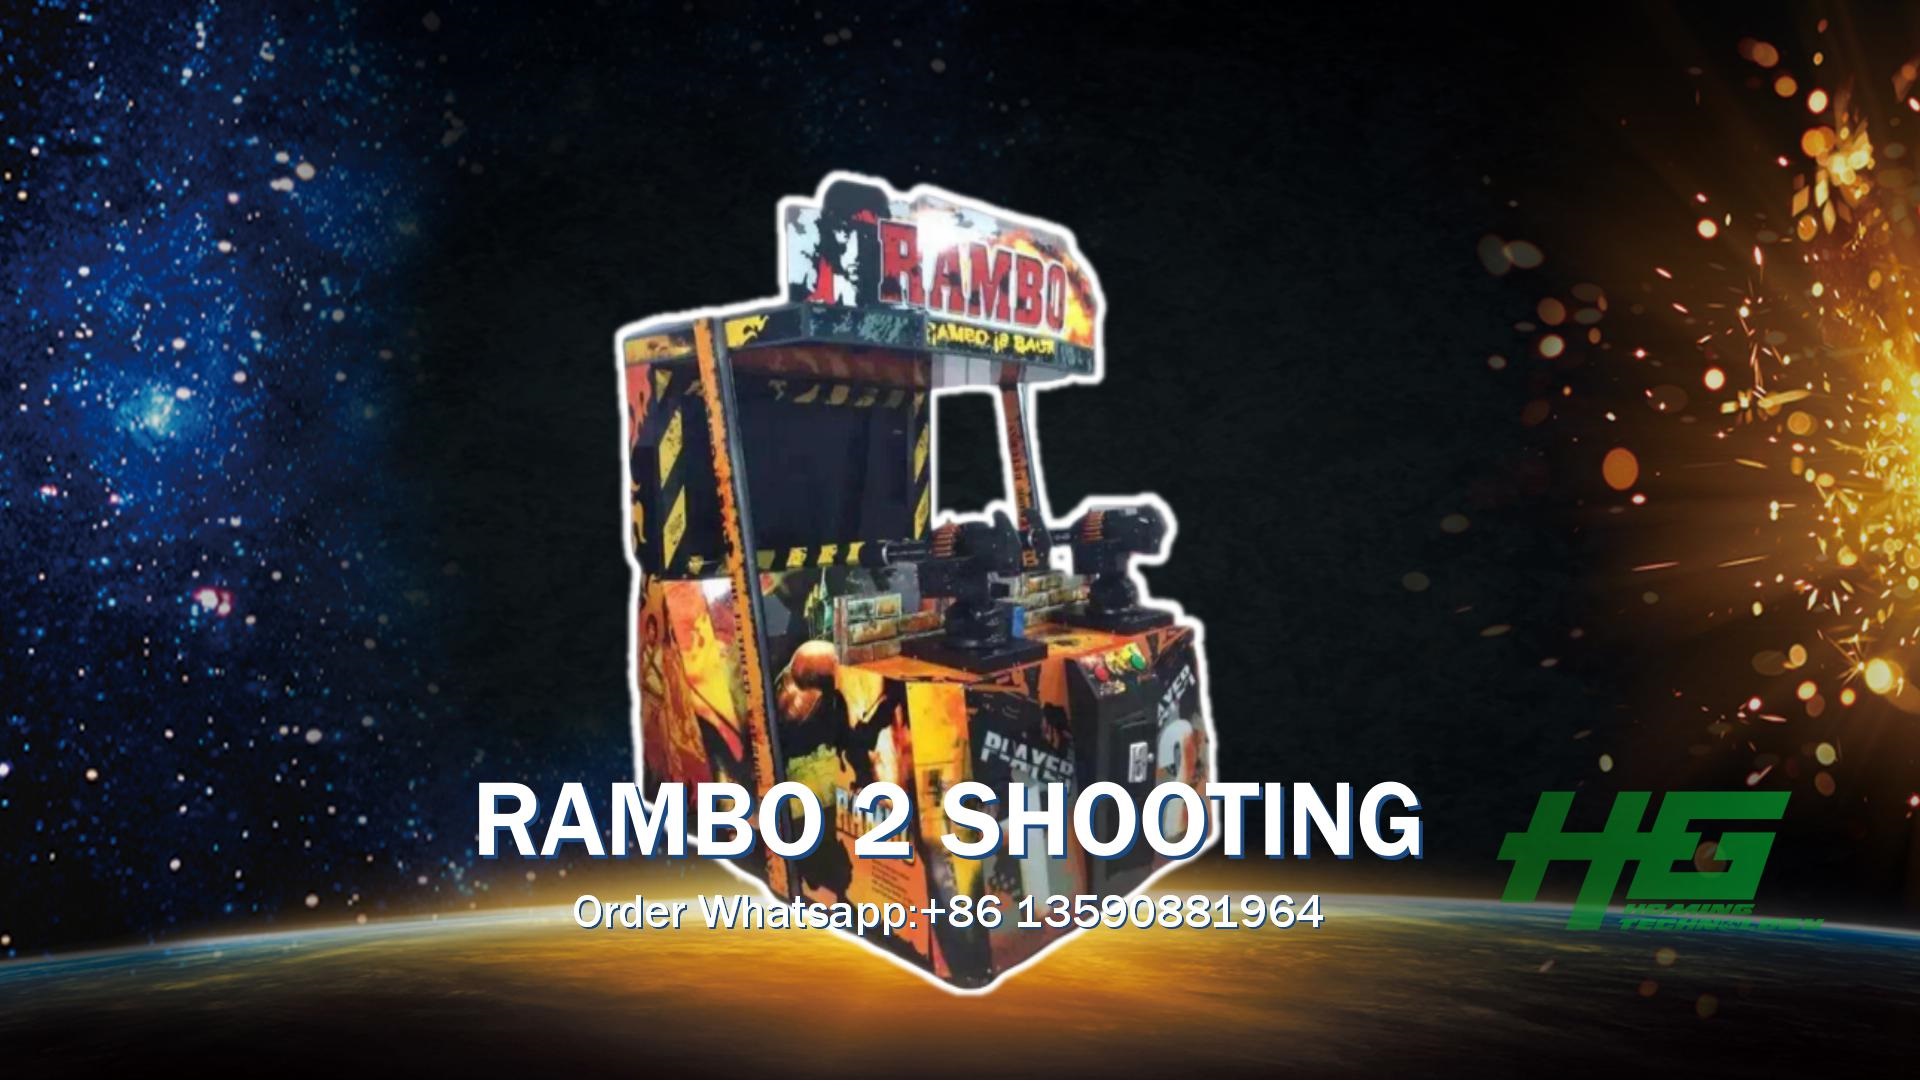 rambo game machine,rambo shooting game,rambo 2 shooting game,rambo shootin gun,rambo shooting video,rambo arcade shooting,let